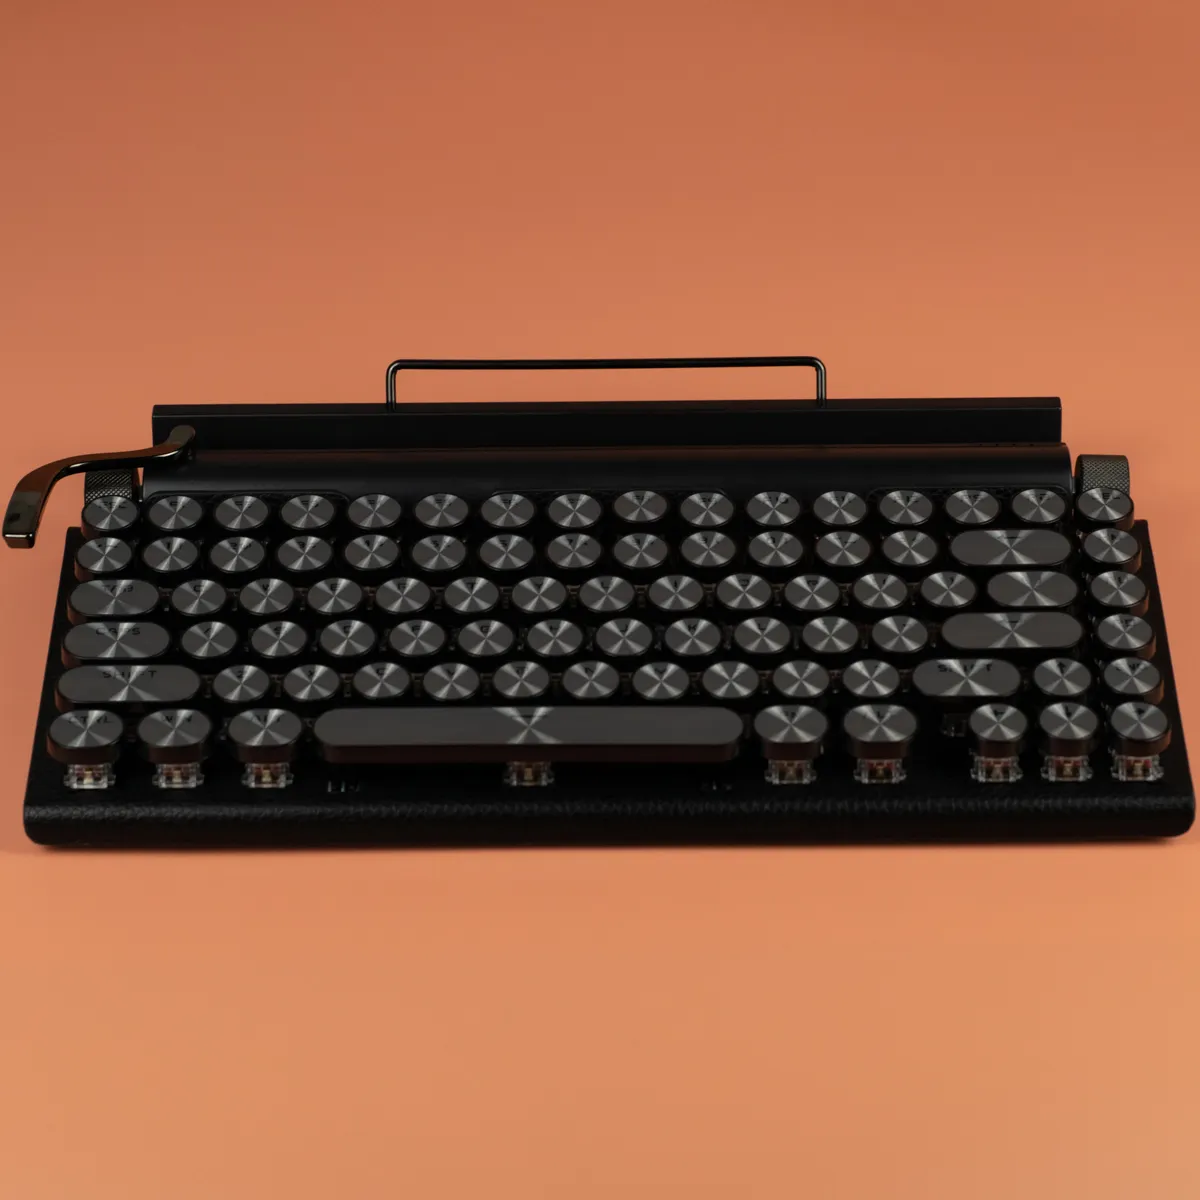 TWK83 Steampunk Round Keycap Silent Keyboard Retro Wireless Mechanical Keyboard Teclado Maquina de Escribir Teclas Redondas